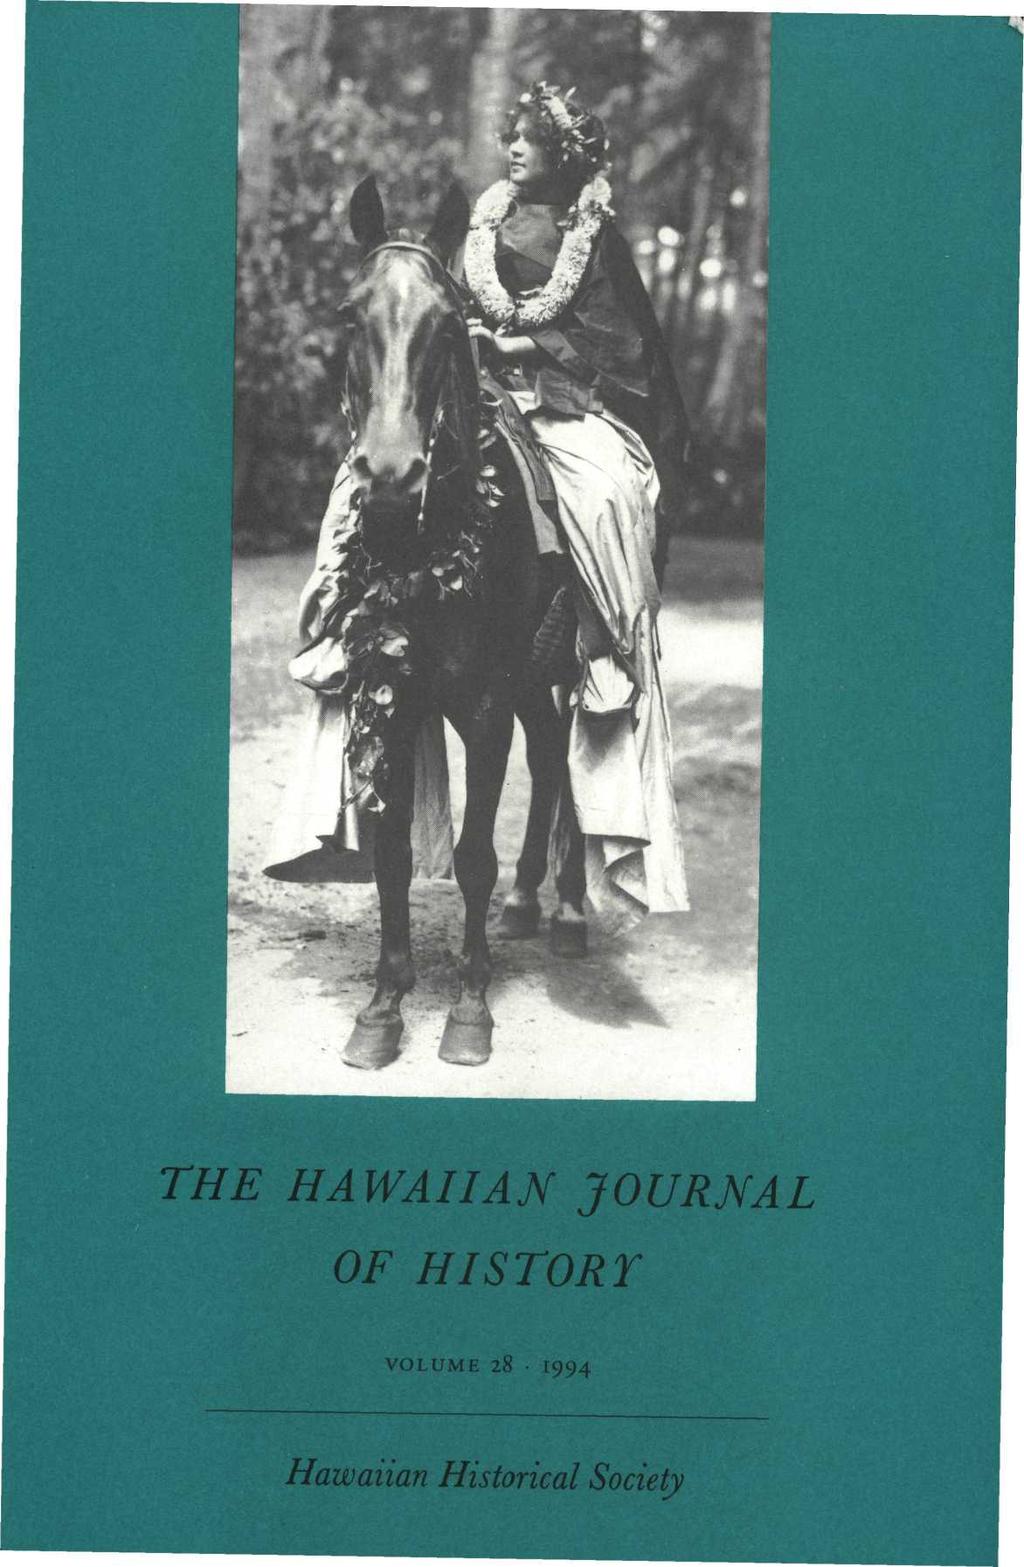 THE HAWAIIAN JOURNAL OF HISTORY